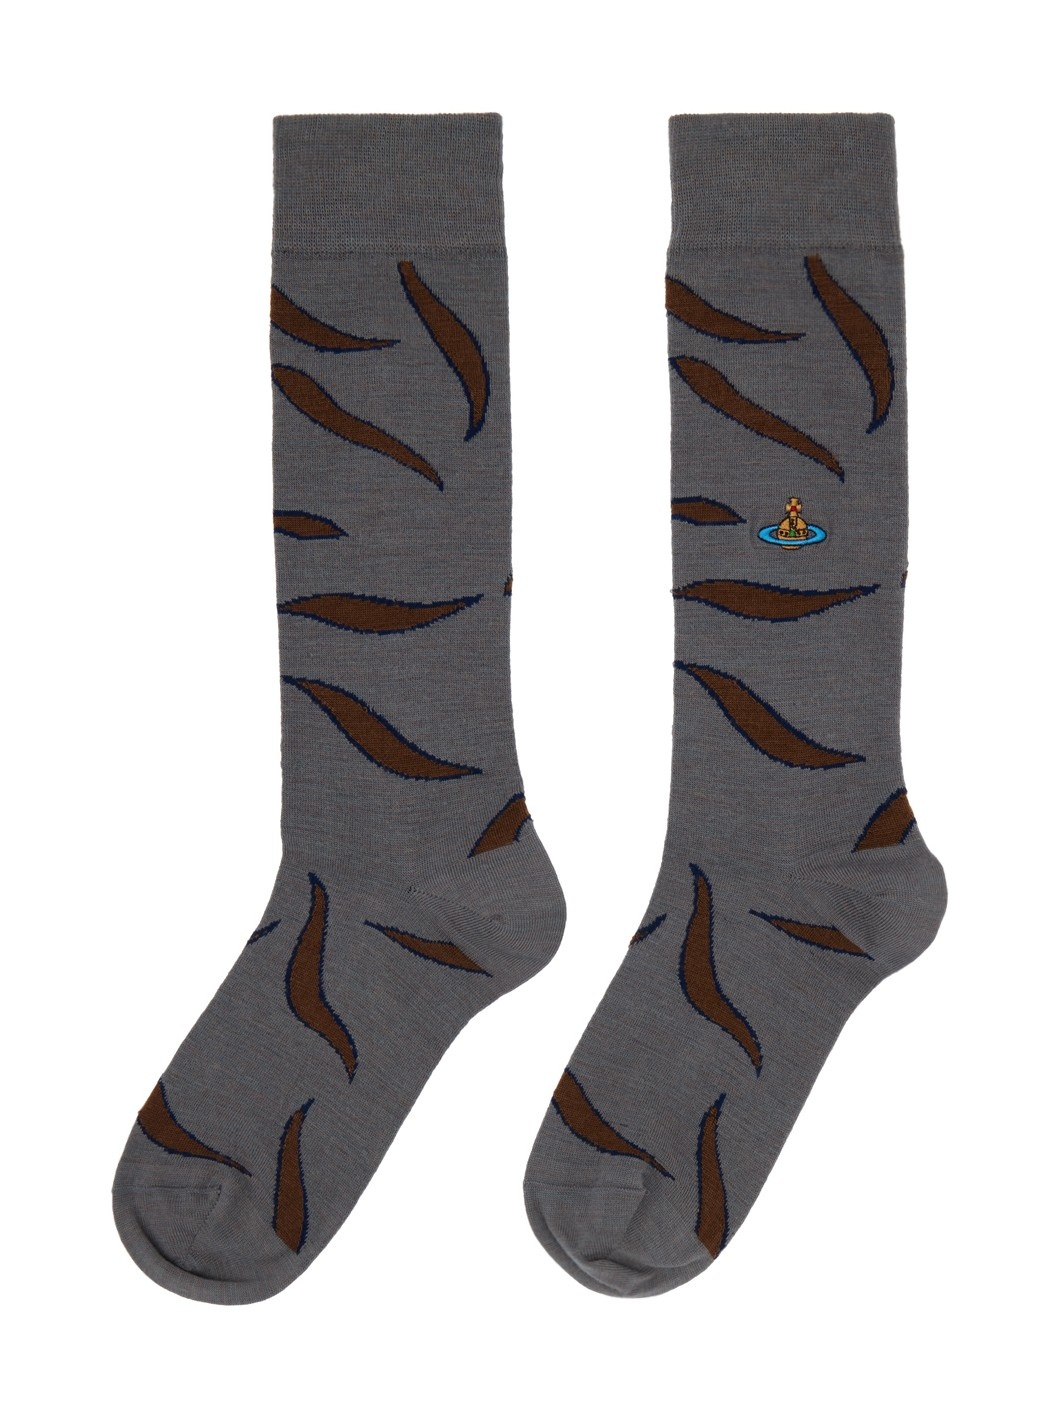 Gray Embroidered Socks - 2